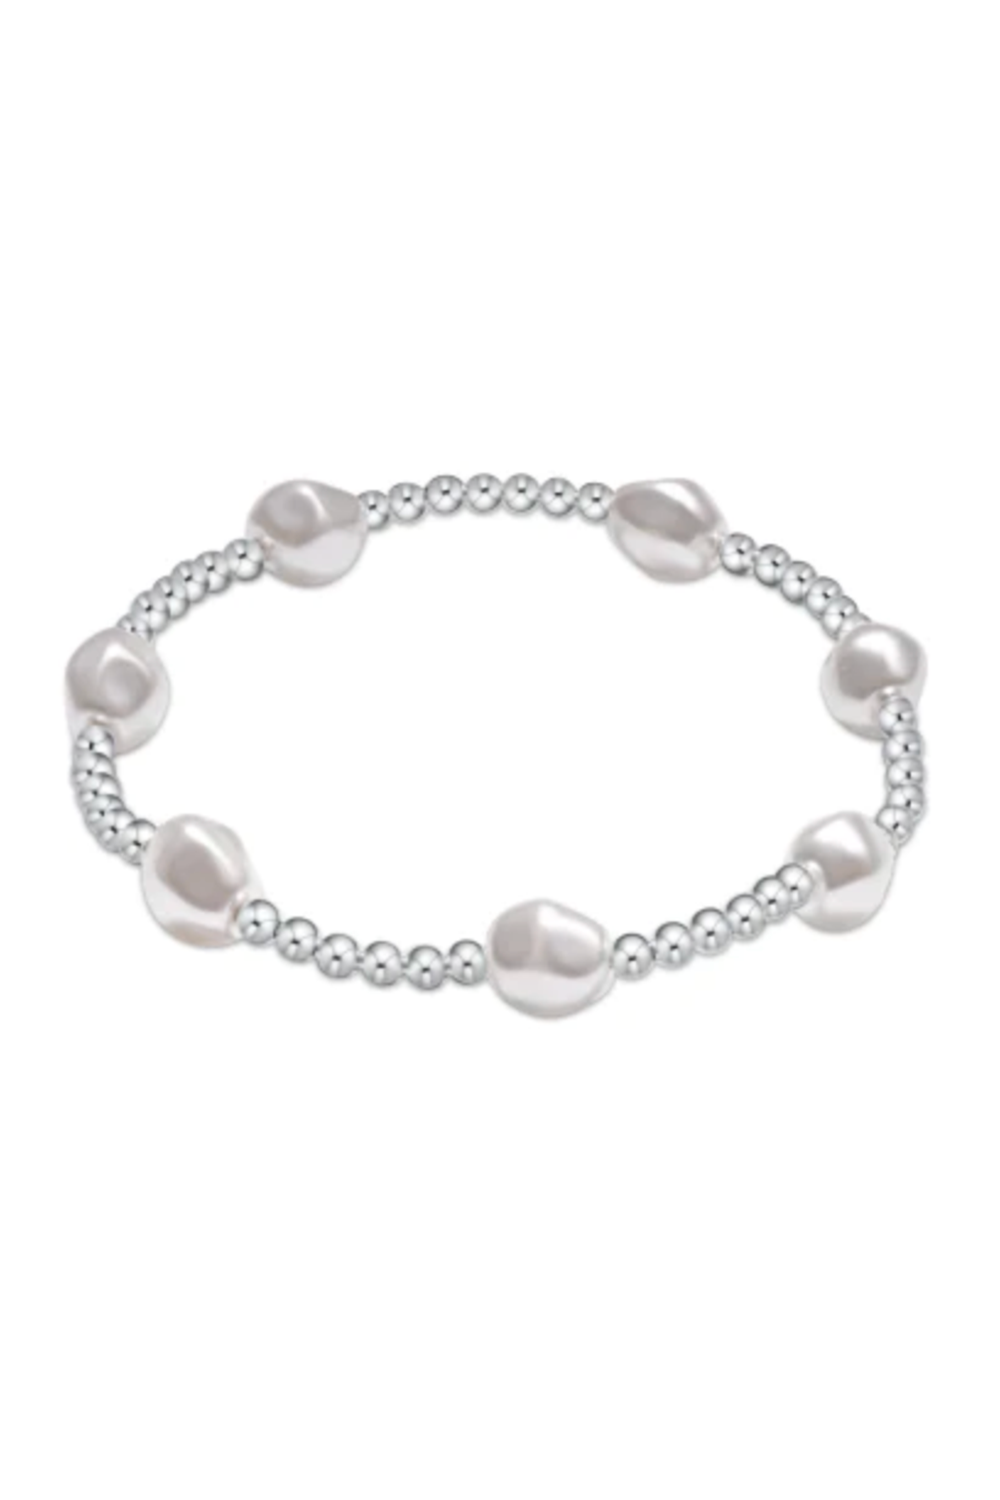 EN Admire Bracelet - Pearl + Sterling